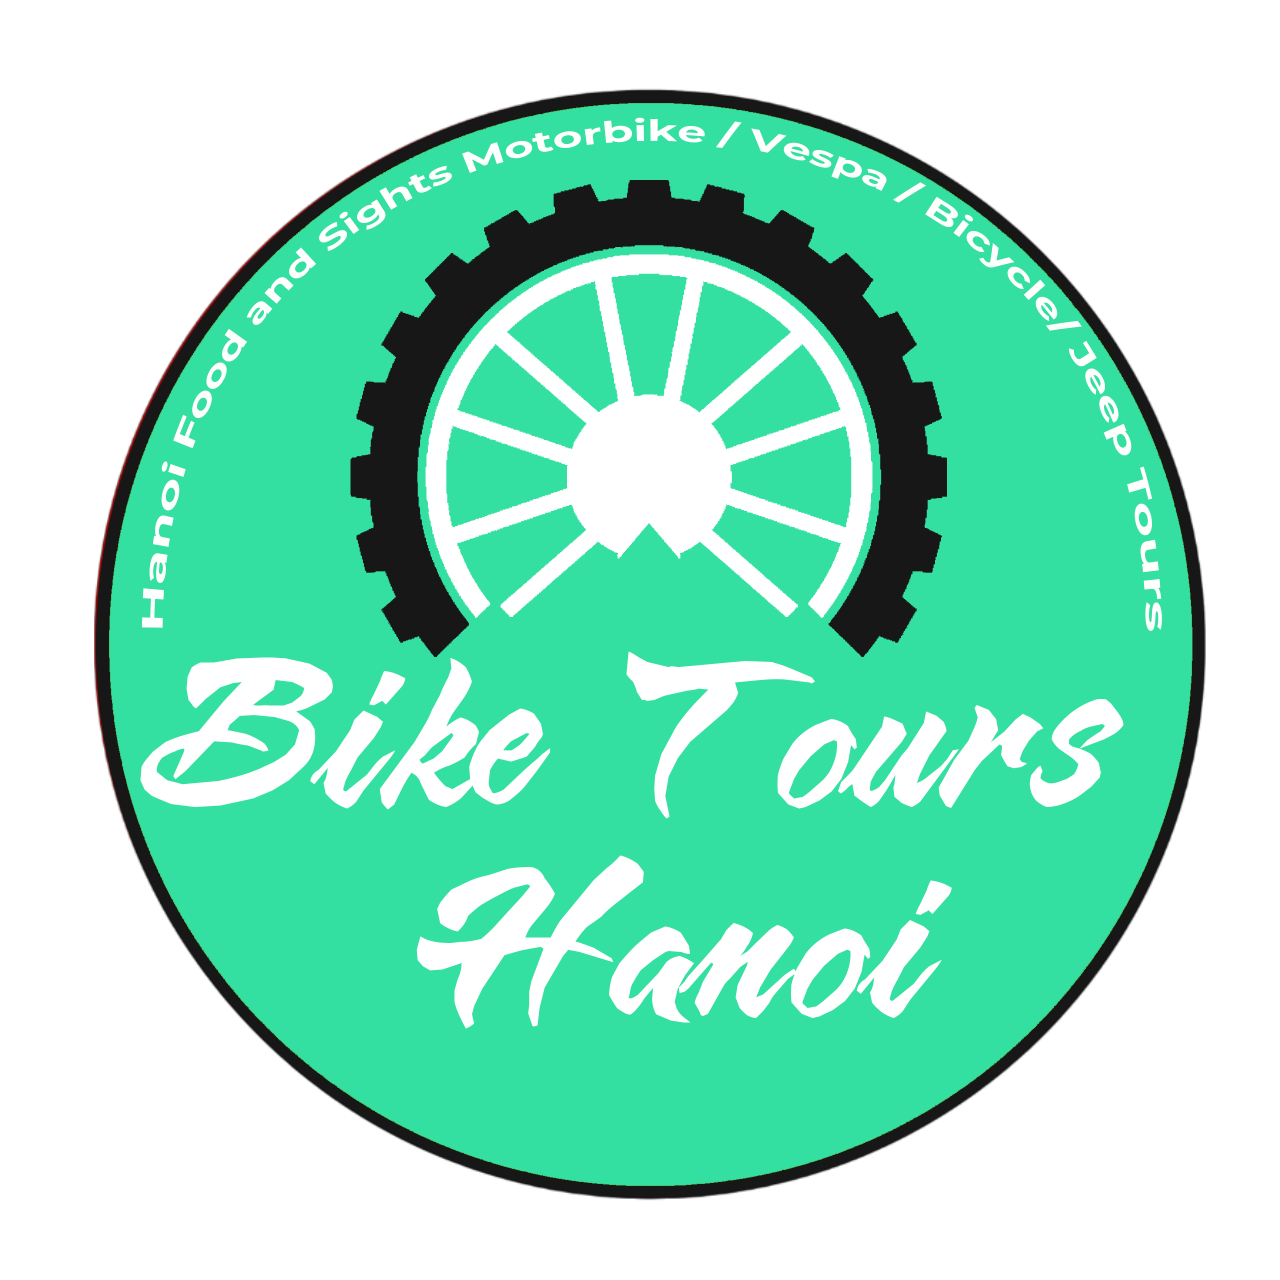 Bike Tours Hanoi – Hanoi Vespa Tours – Motorbike Tours Hanoi – Hanoi Jeep Tours – Hanoi Bicycle Tours